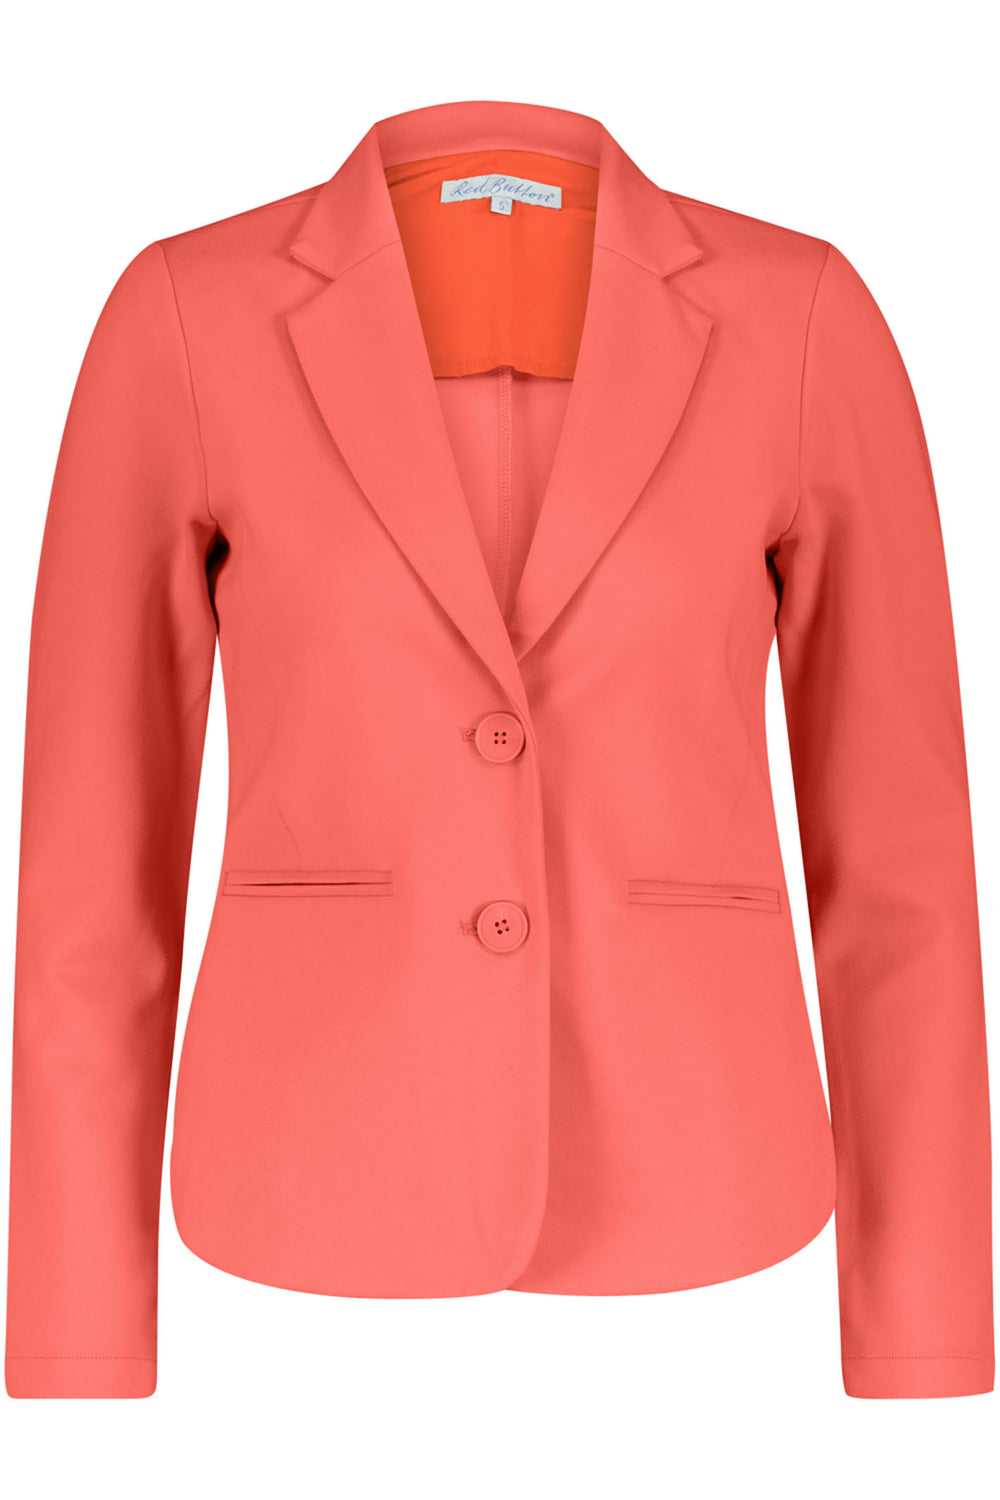 Red Button SRB4213 Flamingo Coral Two Button Blazer Jacket - Olivia Grace Fashion